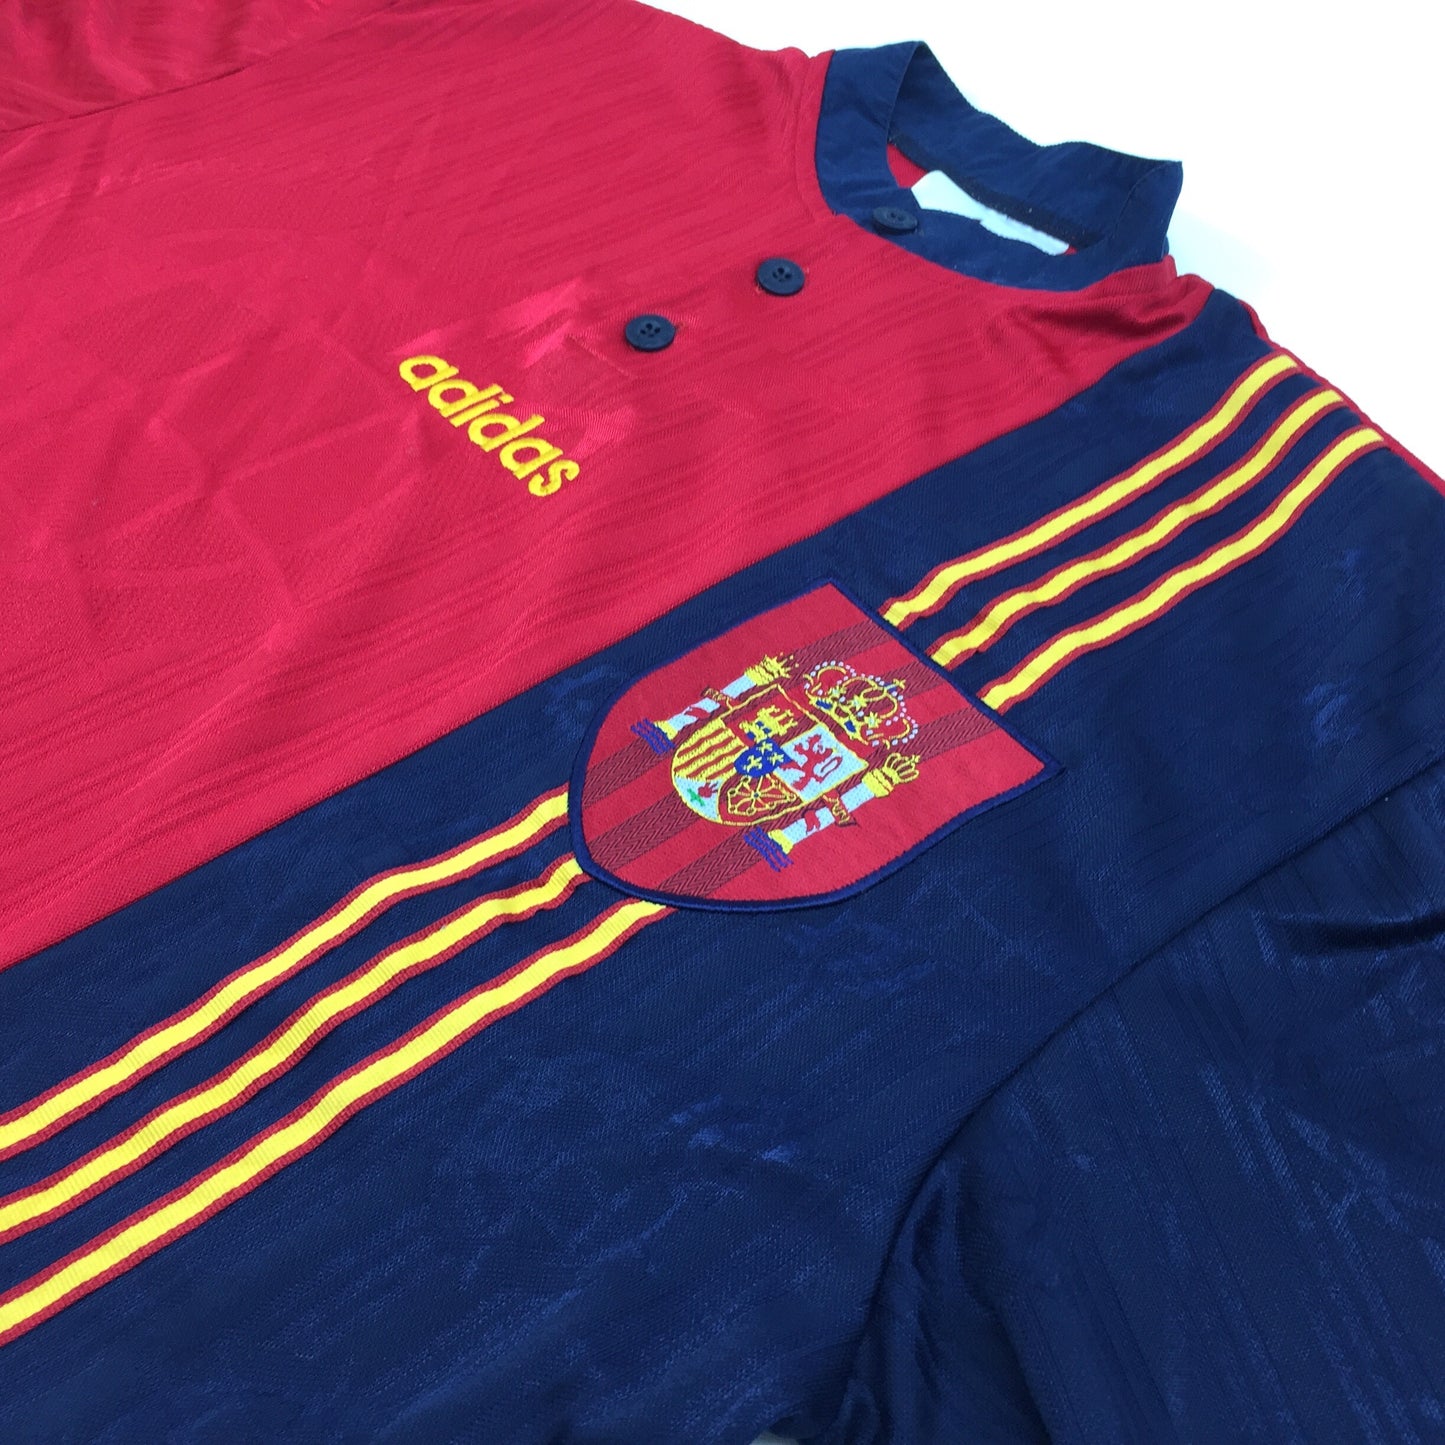 0334 Adidas Vintage Spanish 96 National Team Jersey